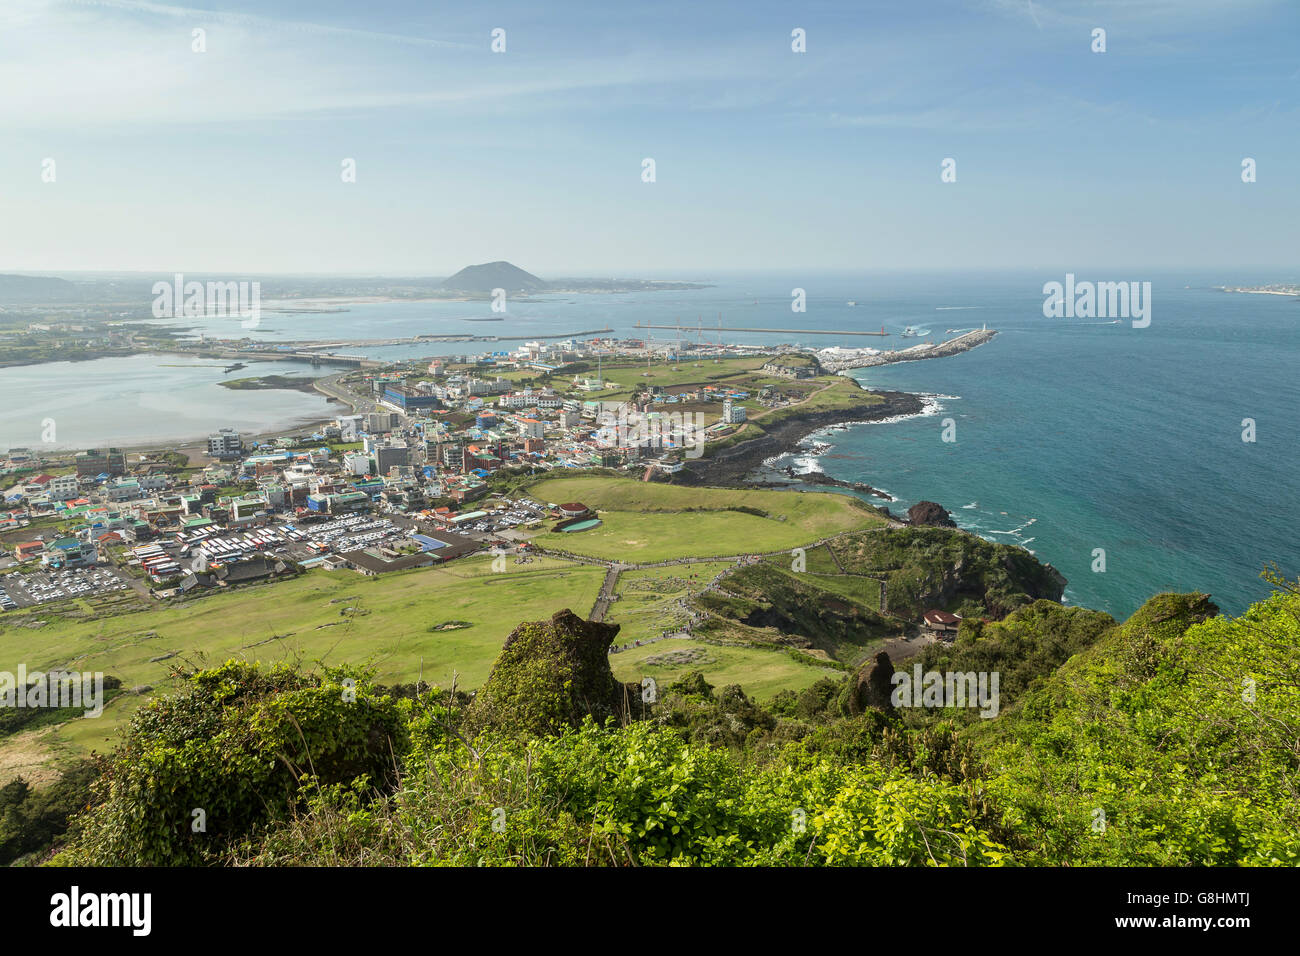 View of Seongsan-ri city and coastline from Seongsan Ilchulbong Peak on Jeju Island in South Korea. Stock Photo